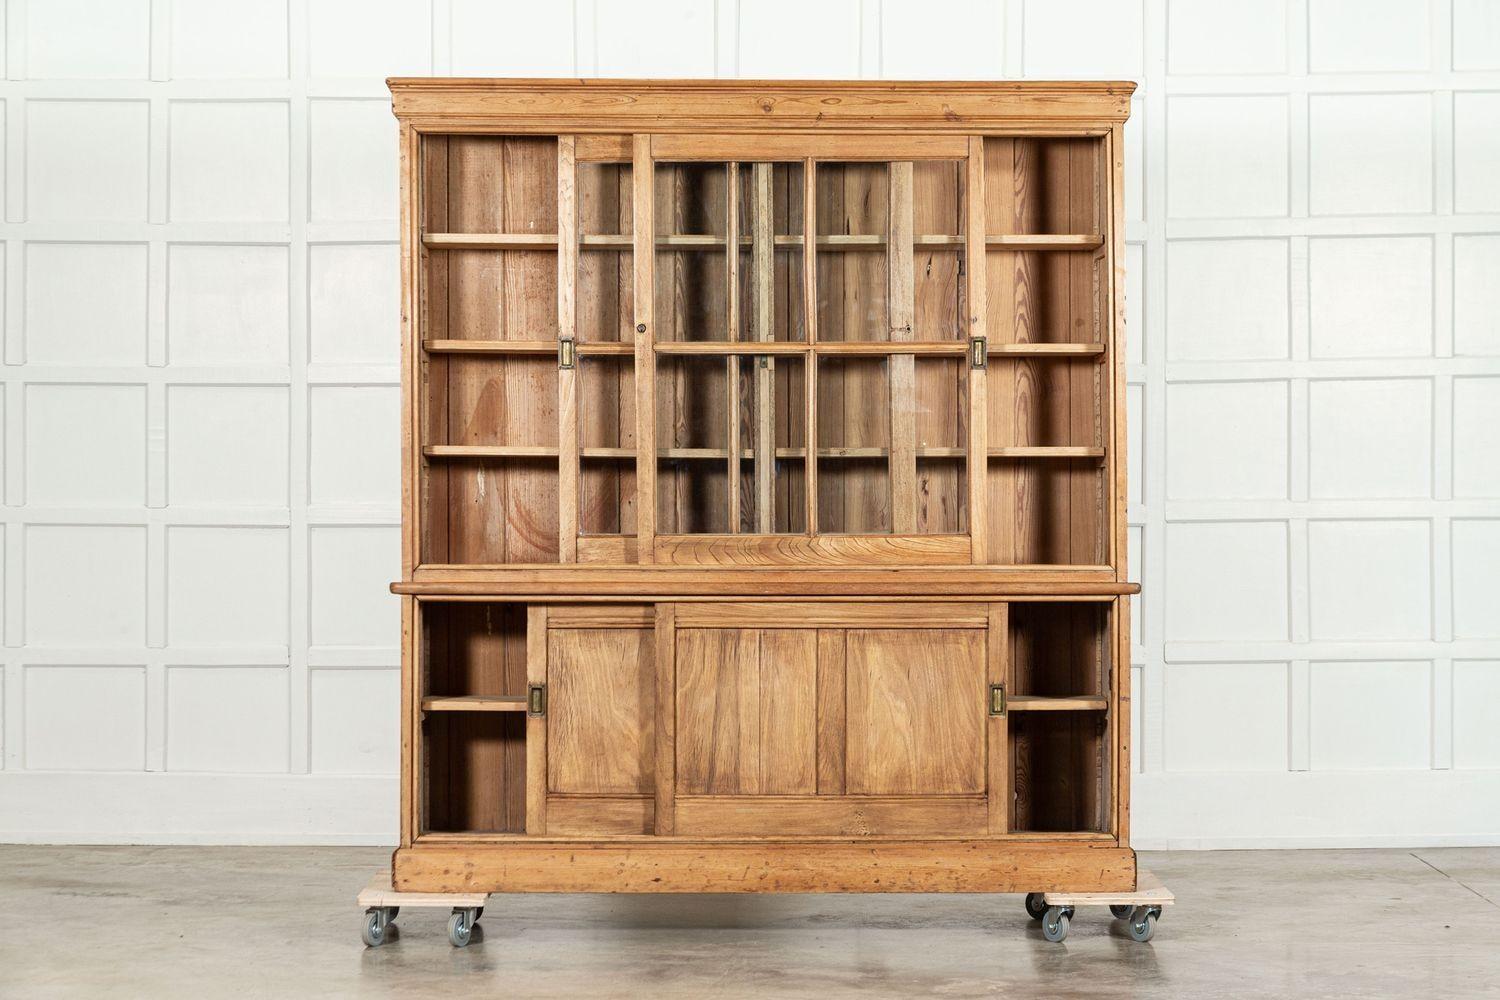 circa 1870
Large English Ash & Pine Glazed Bookcase Cabinet
sku 1814
W173 x D39 x H187 cm.
Weight 140 kg